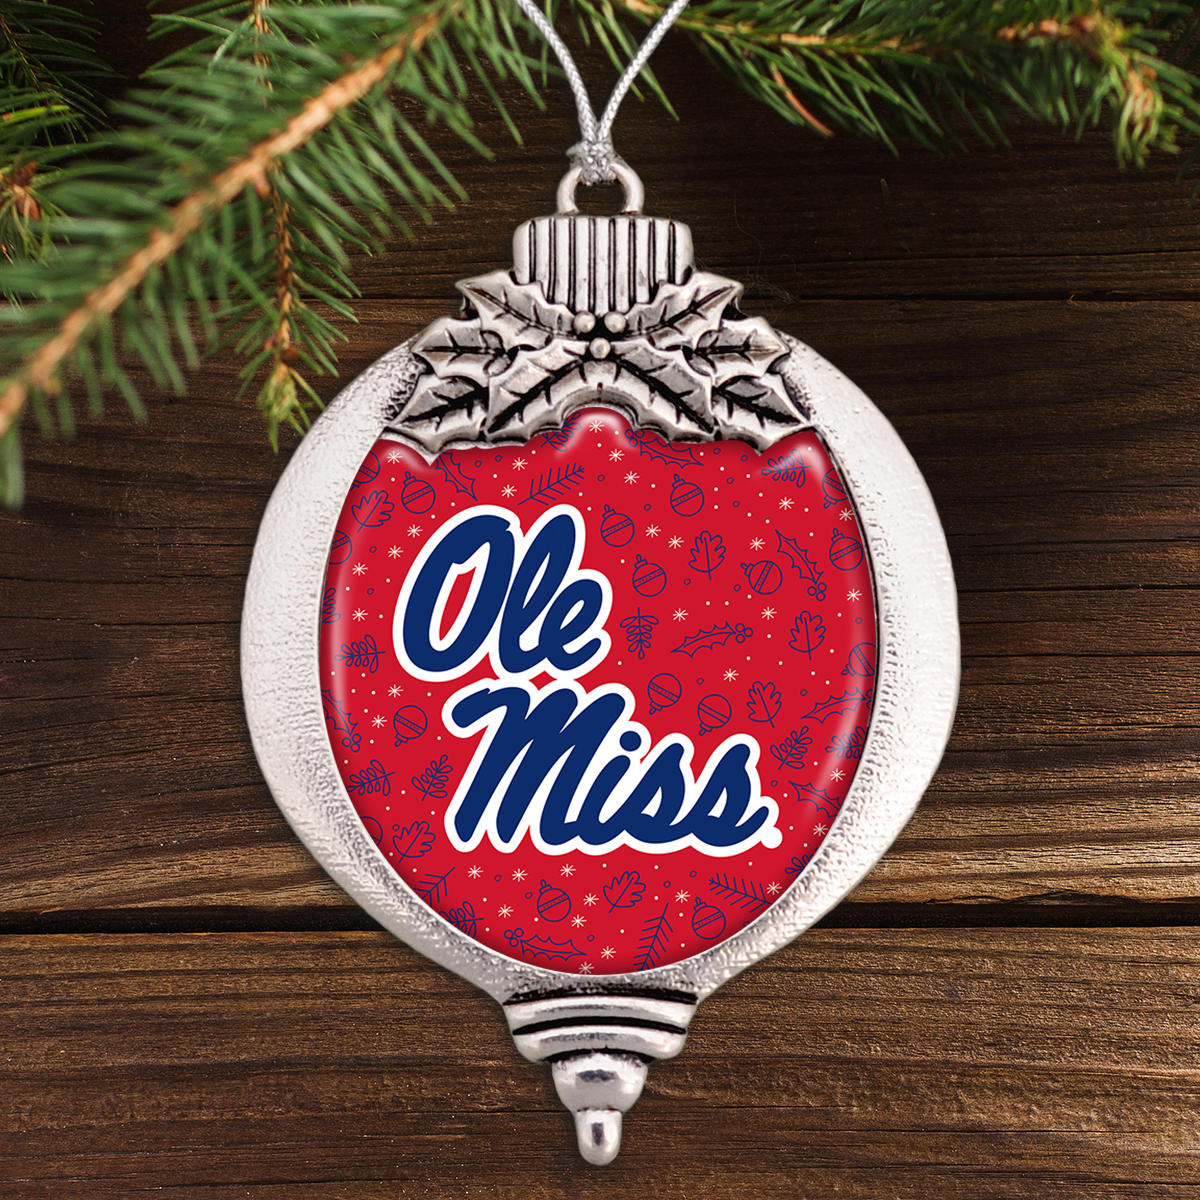 Ole Miss Rebels Holiday Bulb Ornament